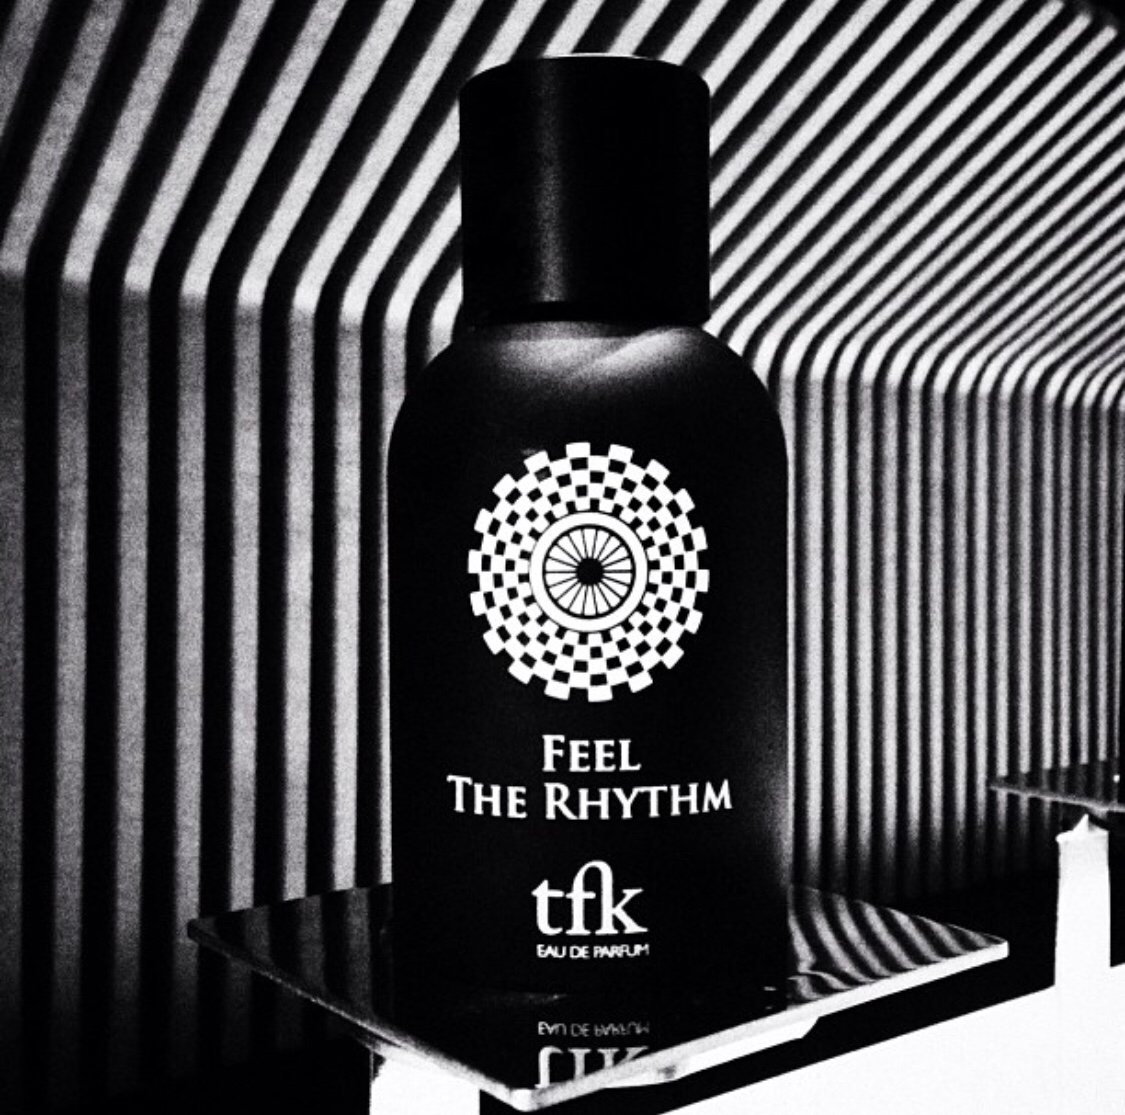 The Fragrance Kitchen (TFK) - Feel the rhythm